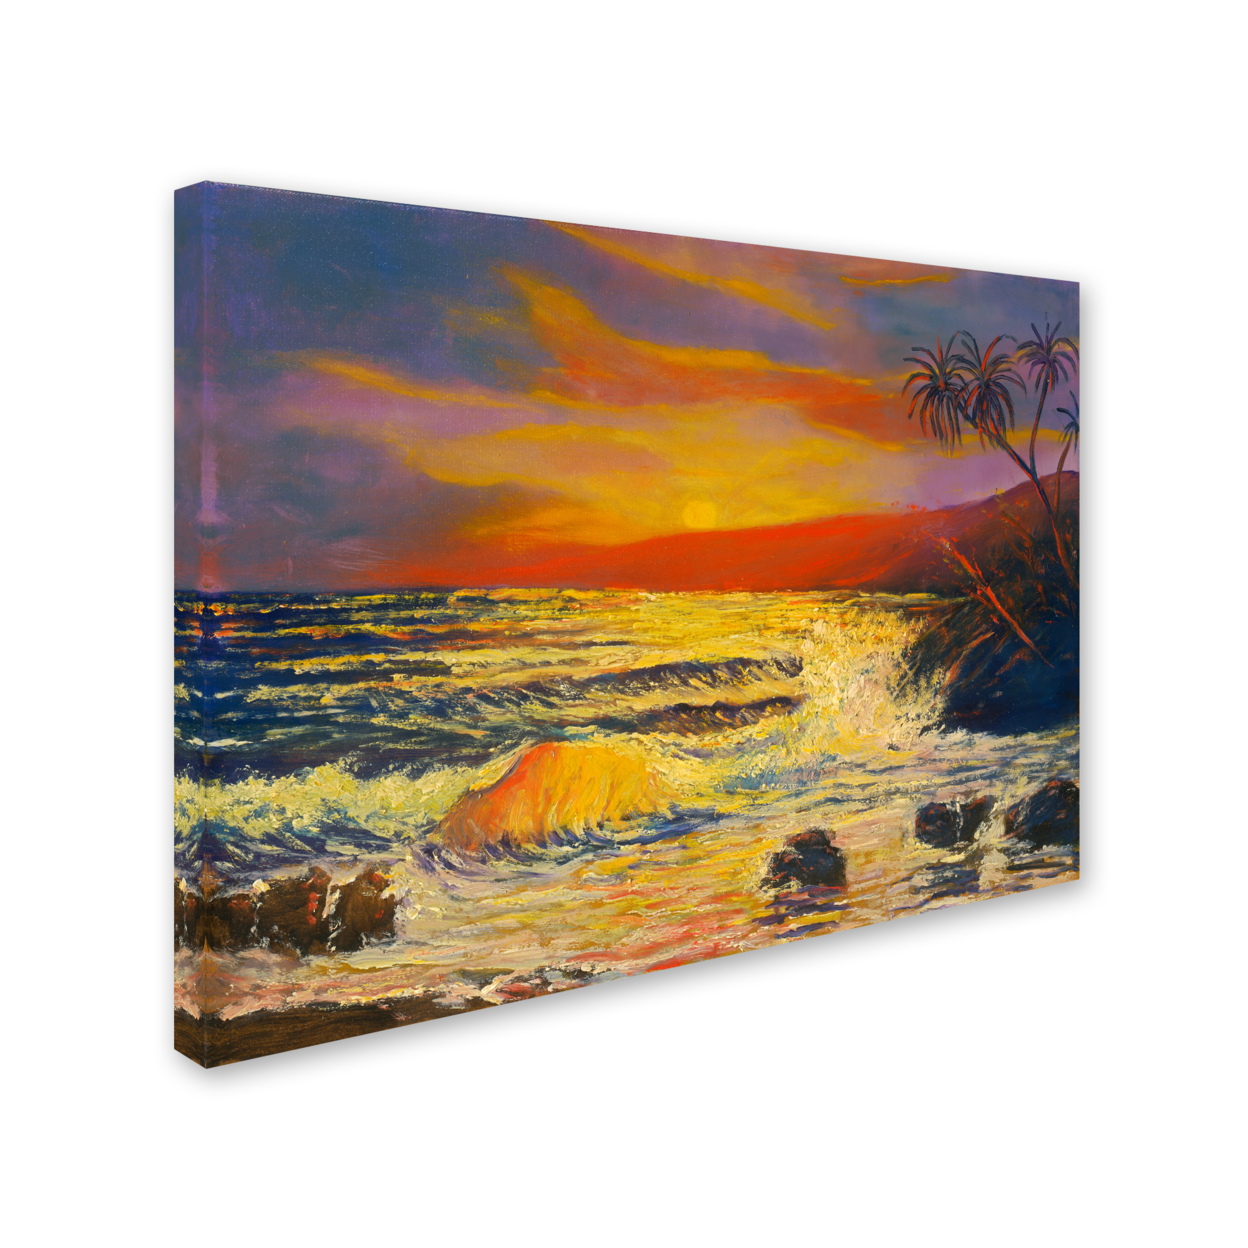 Manor Shadian 'Maui Sunset' 14 X 19 Canvas Art